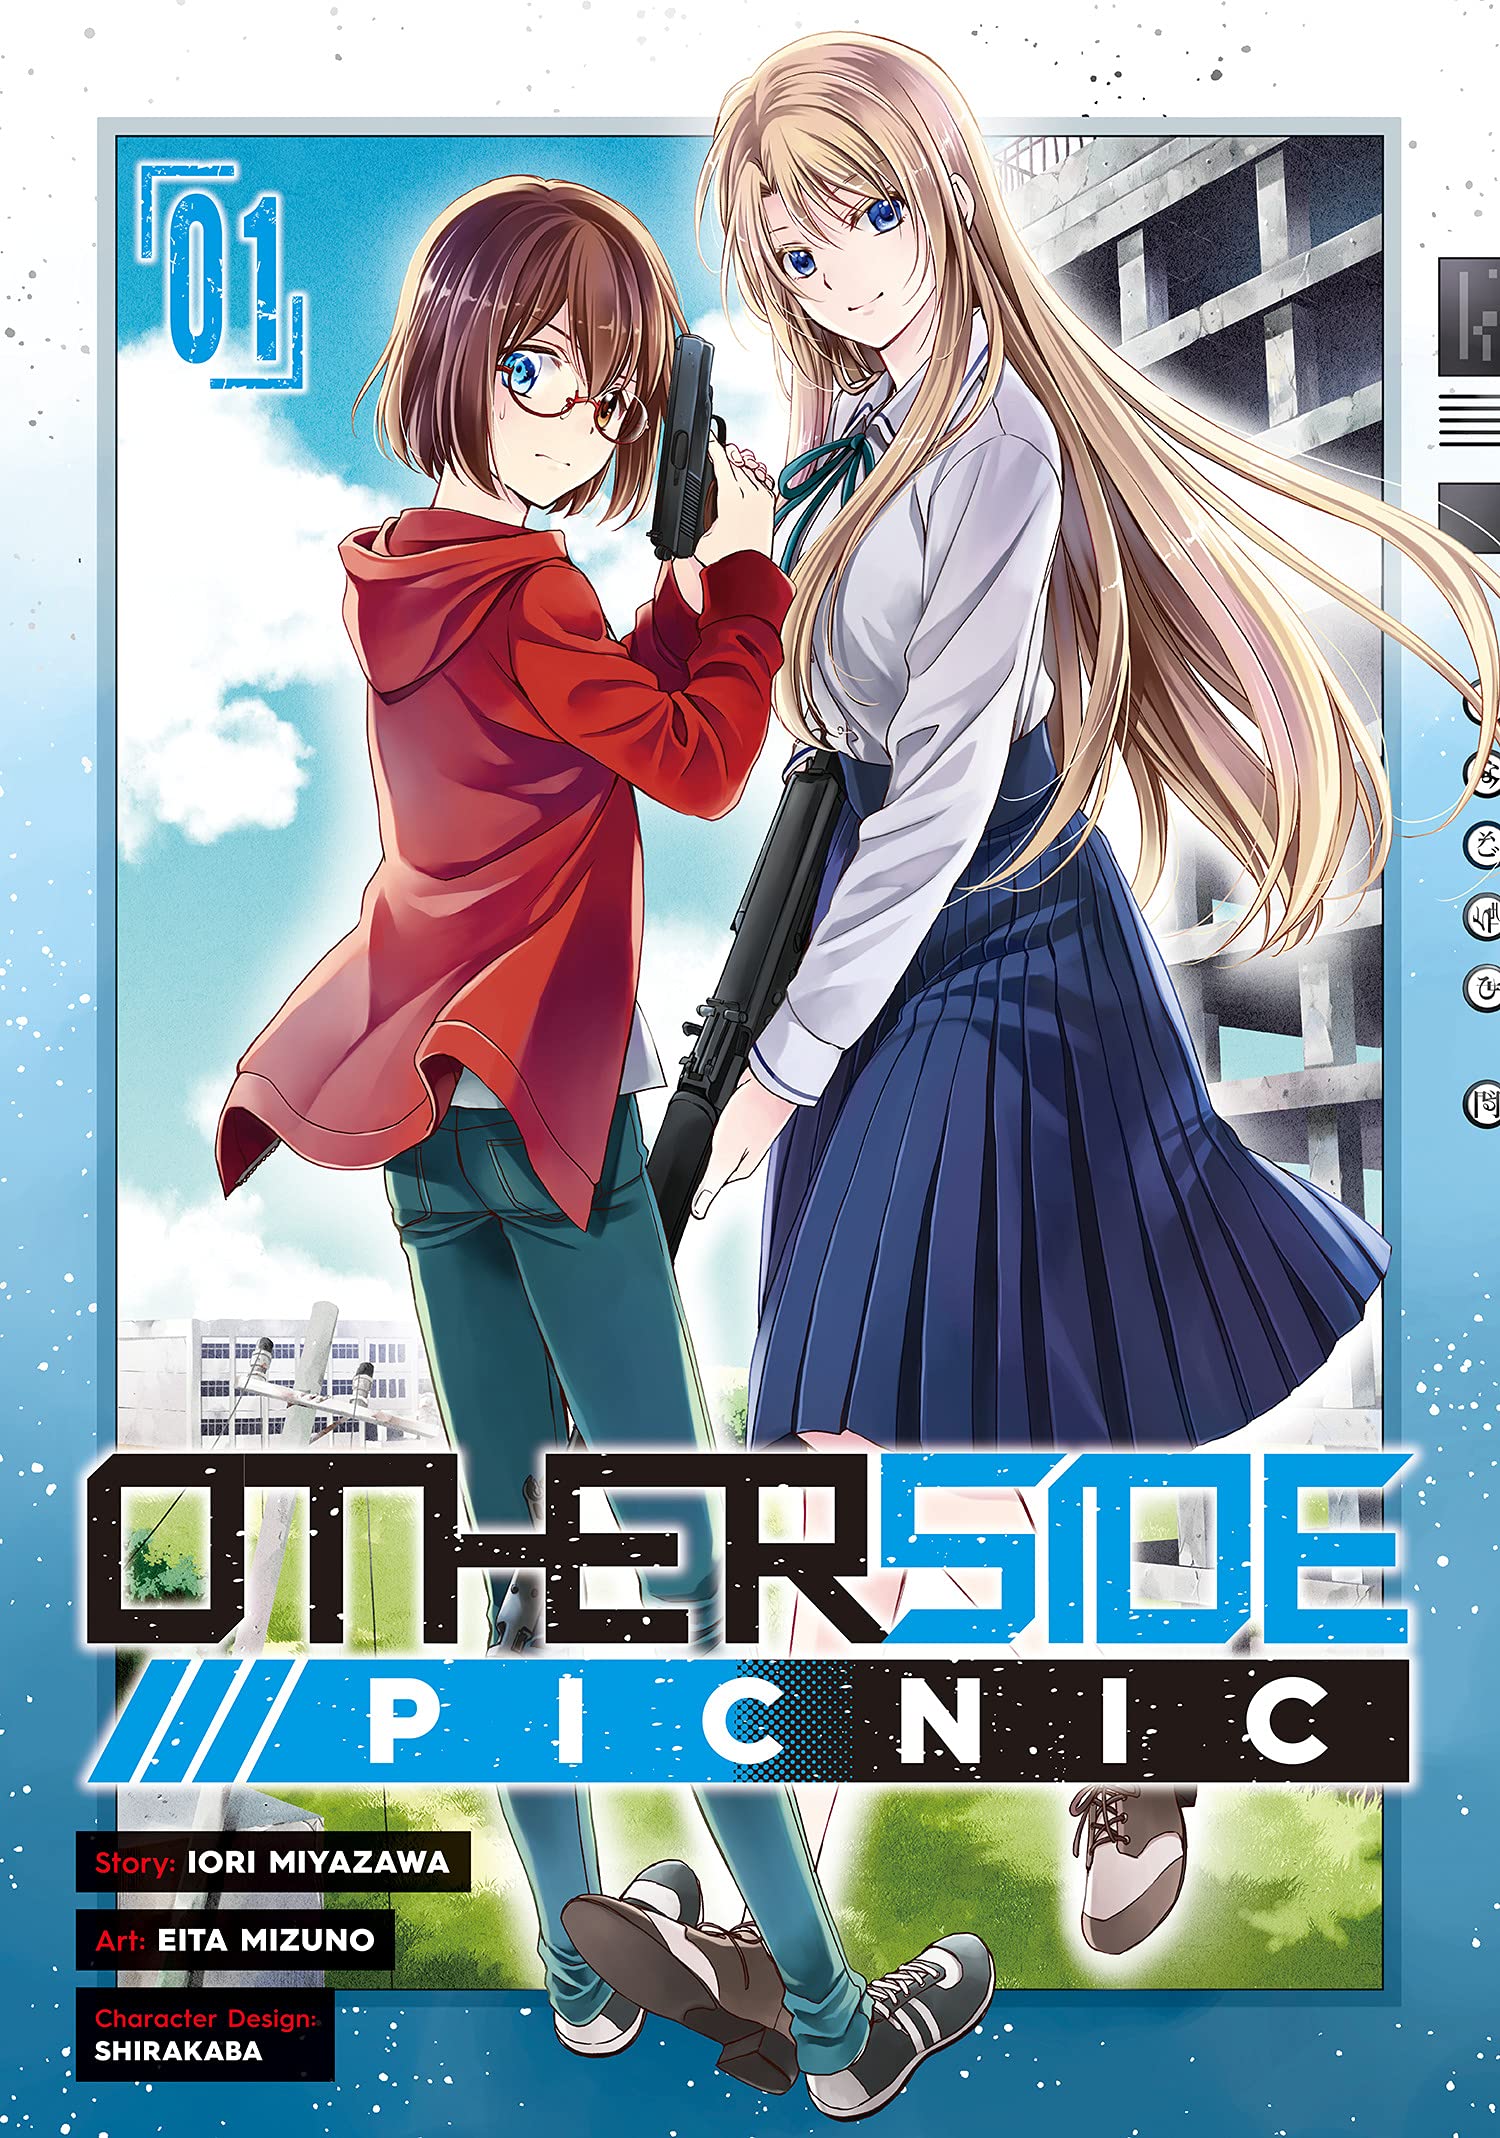 Urasekai Picnic (Otherside Picnic) Image by CUTEG #3267856 - Zerochan Anime  Image Board